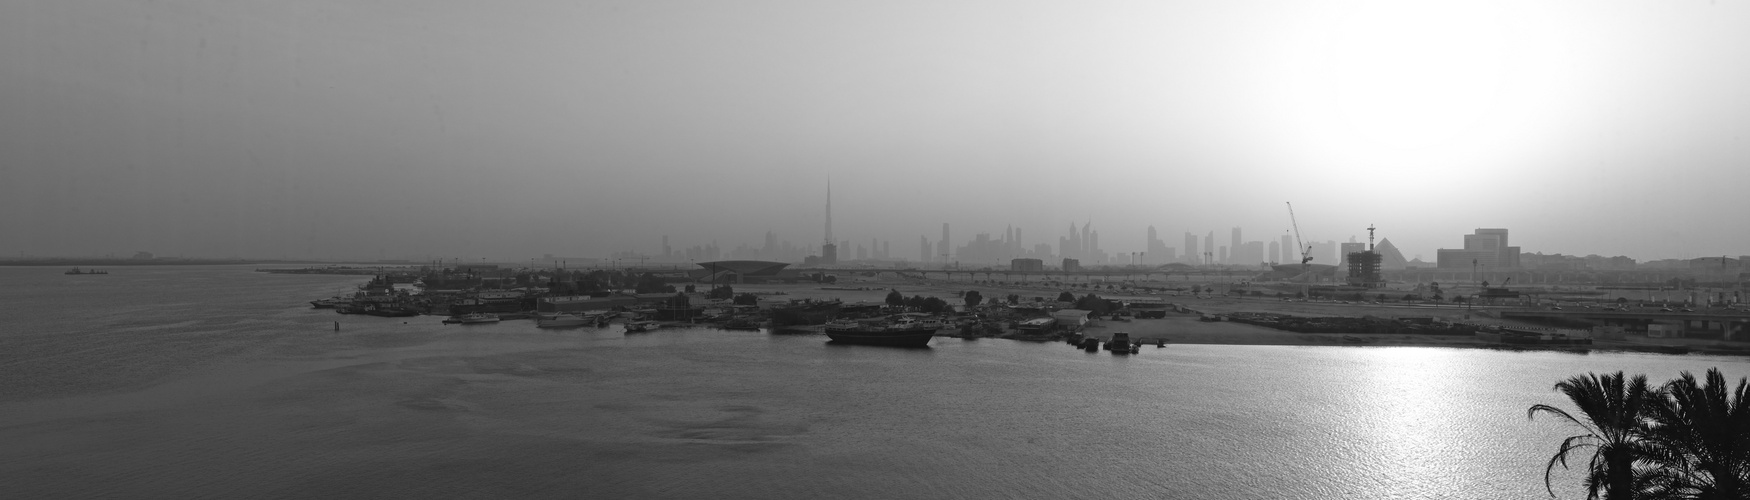 Dubai Skyline Reloaded